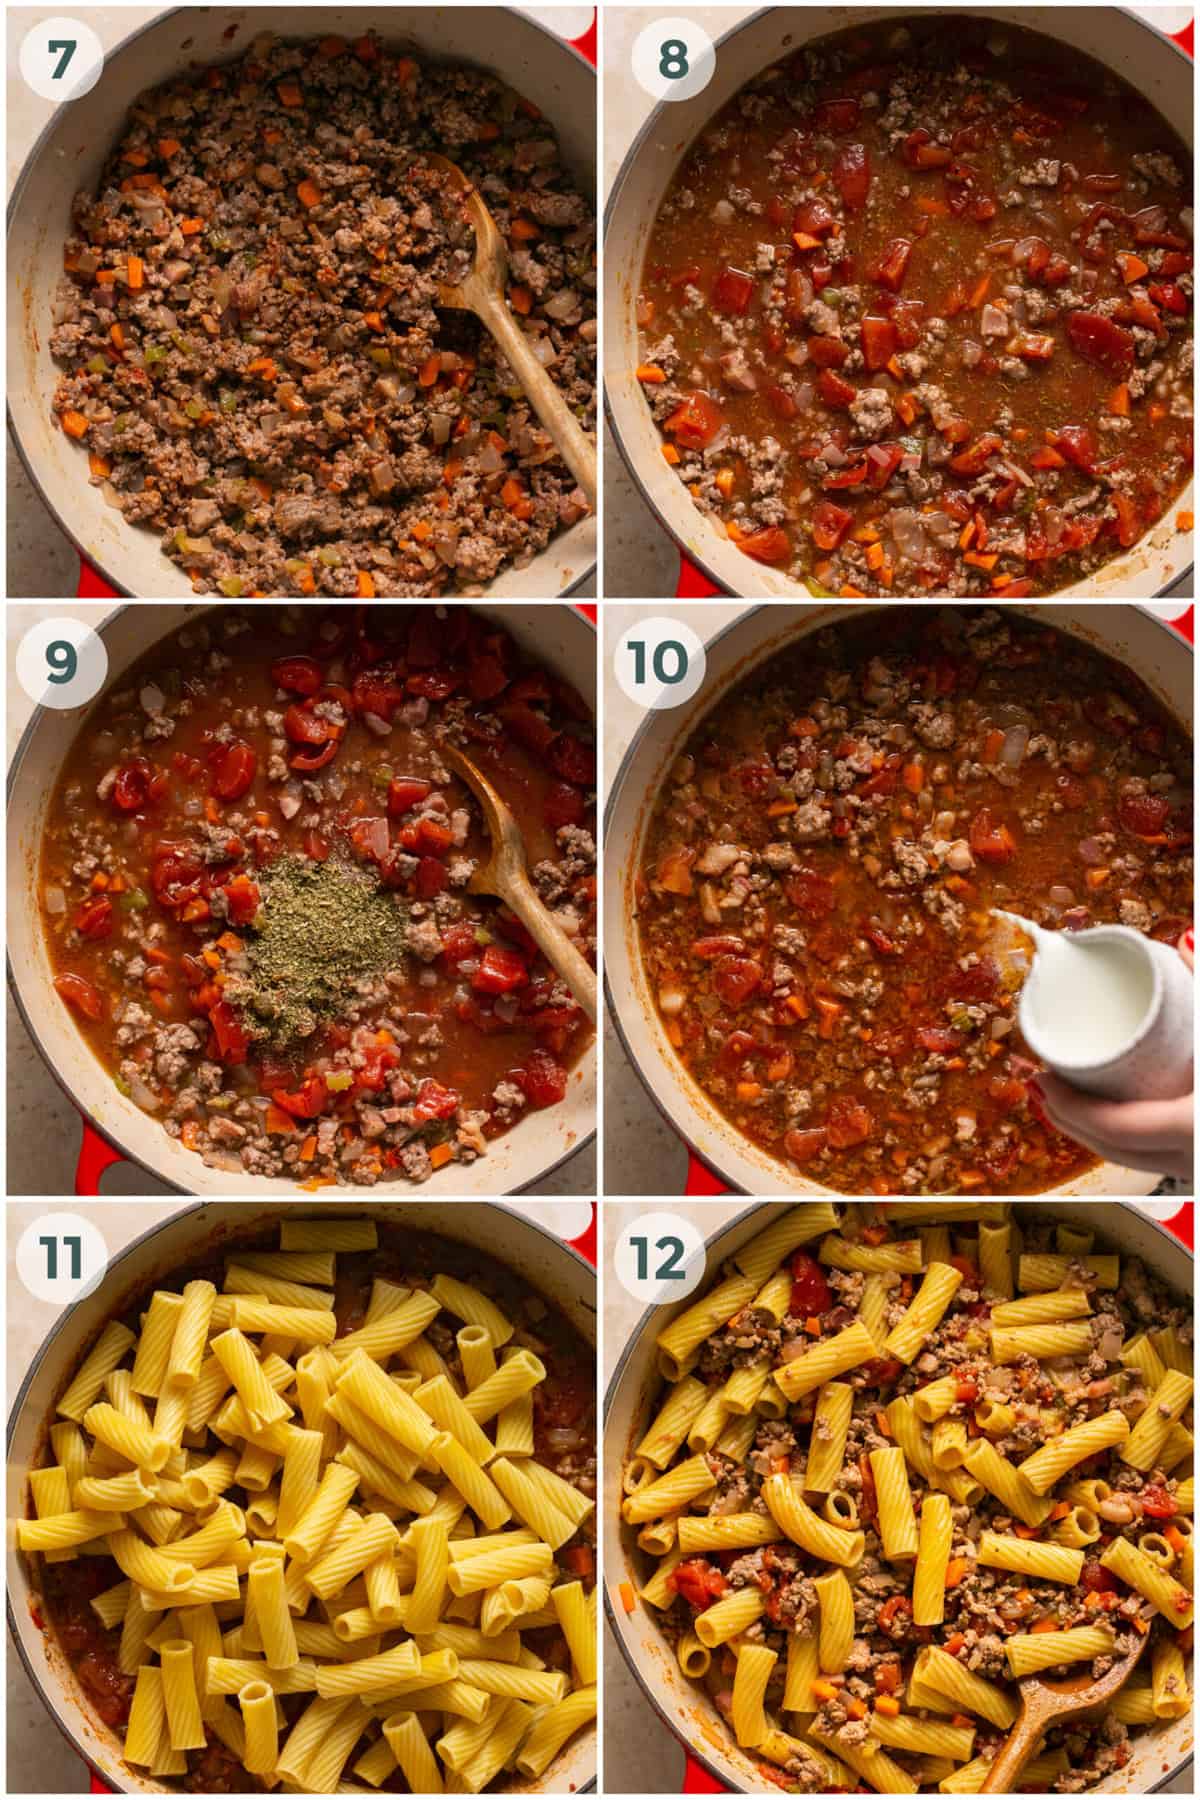 final 6 steps of preparing rigatoni bolognese recipe